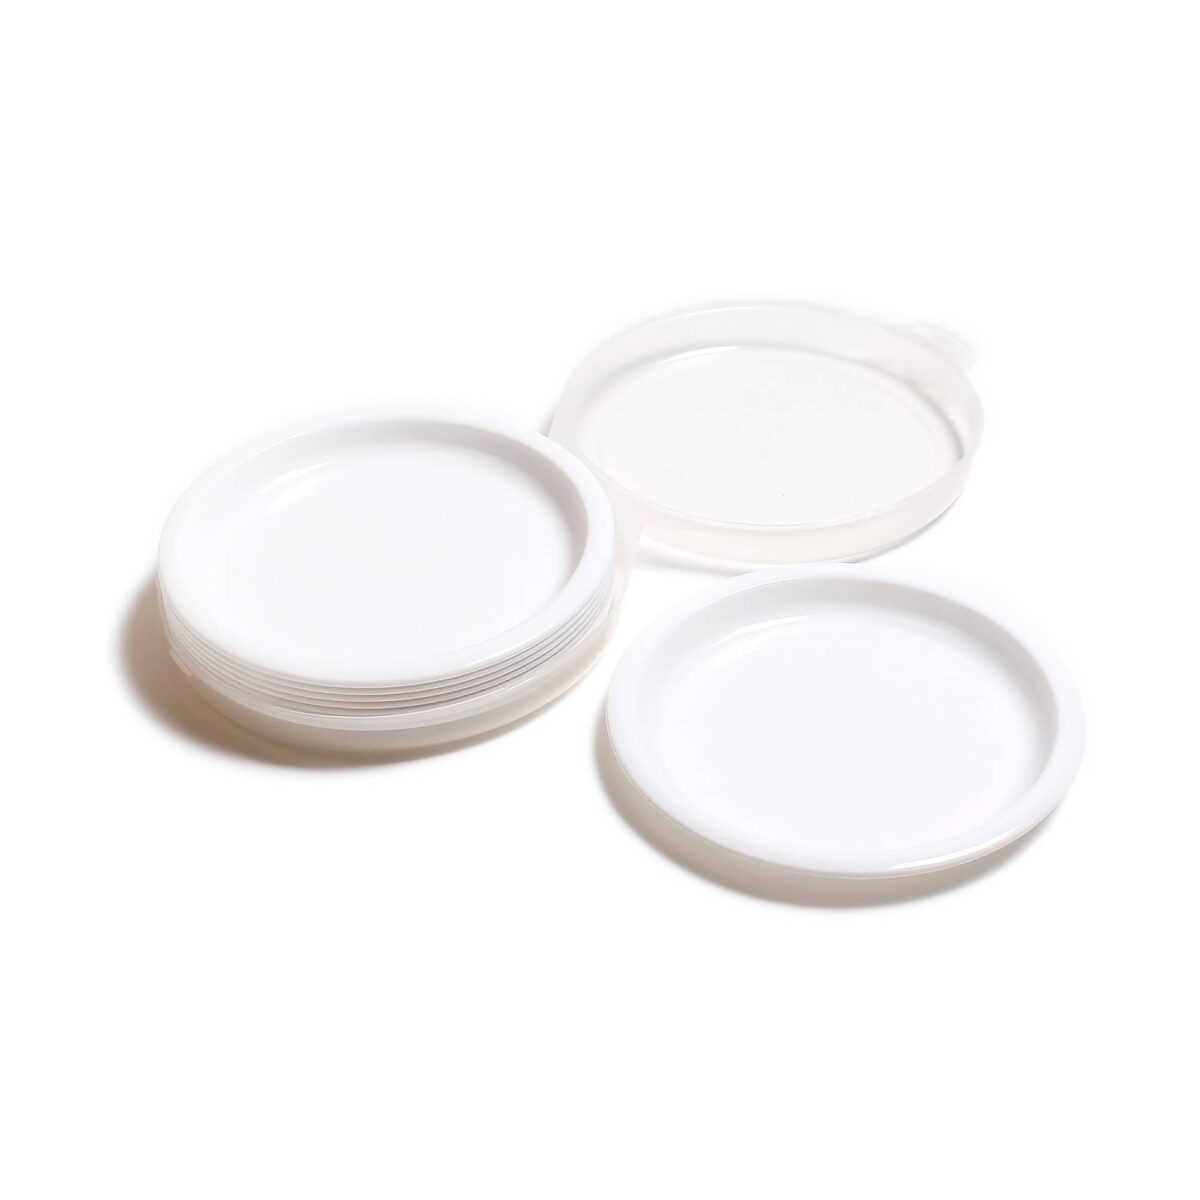 8 Pack Plastic Plates , white reusable plates, kids plates